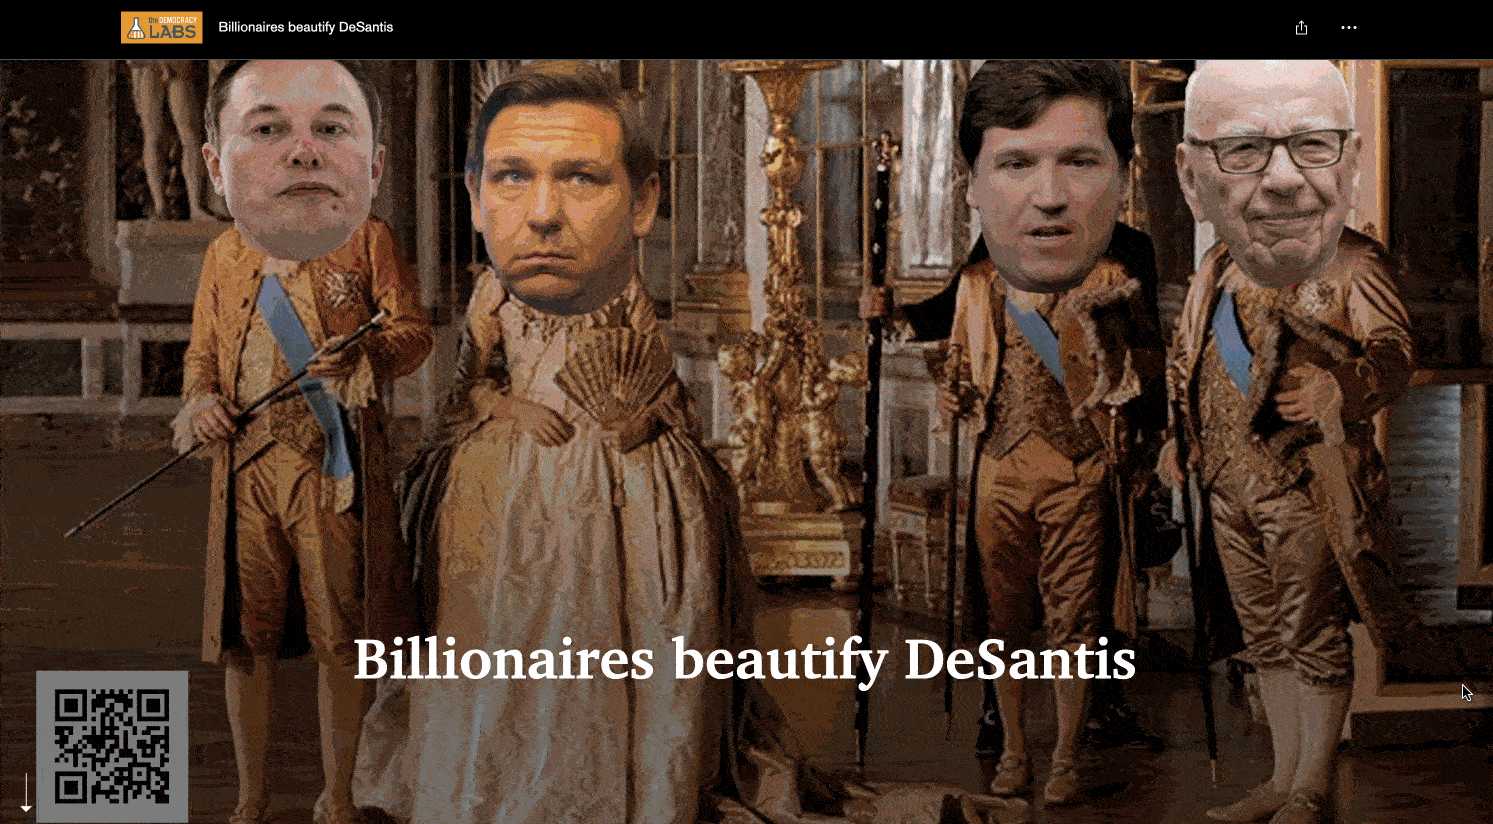 Billionaires beautify DeSantis to get tax cuts